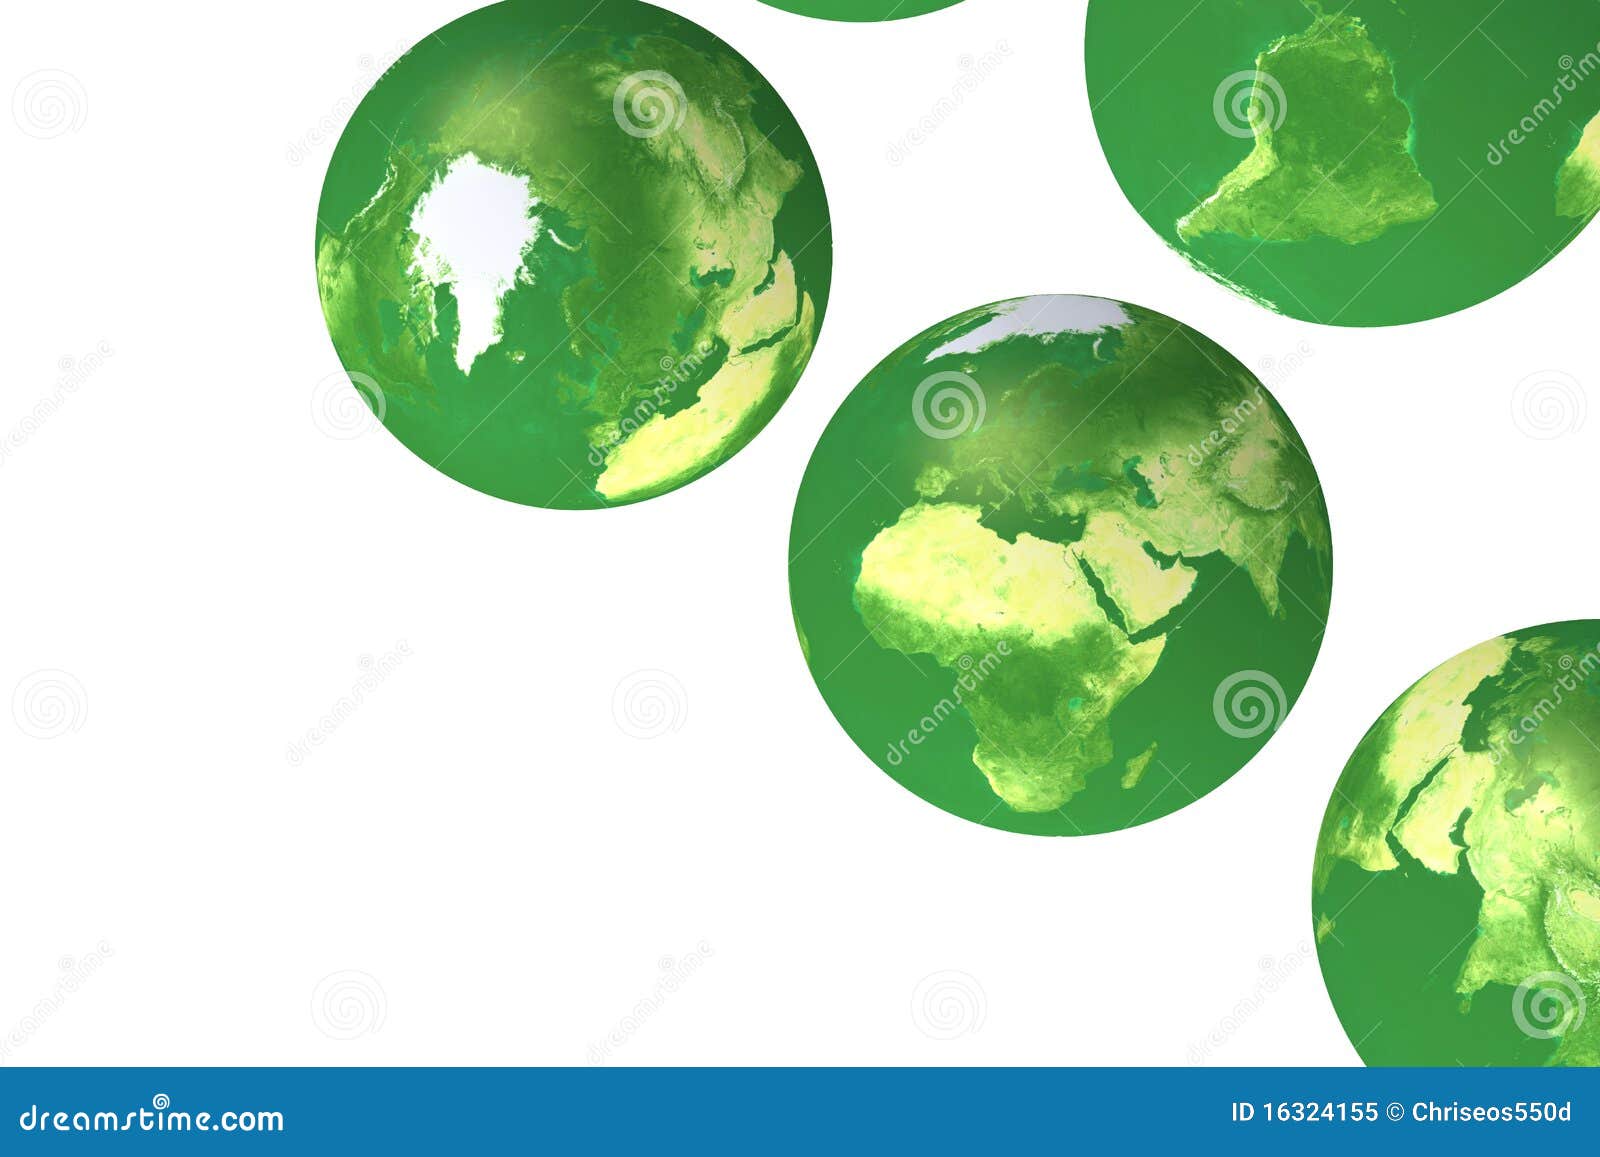 green globes